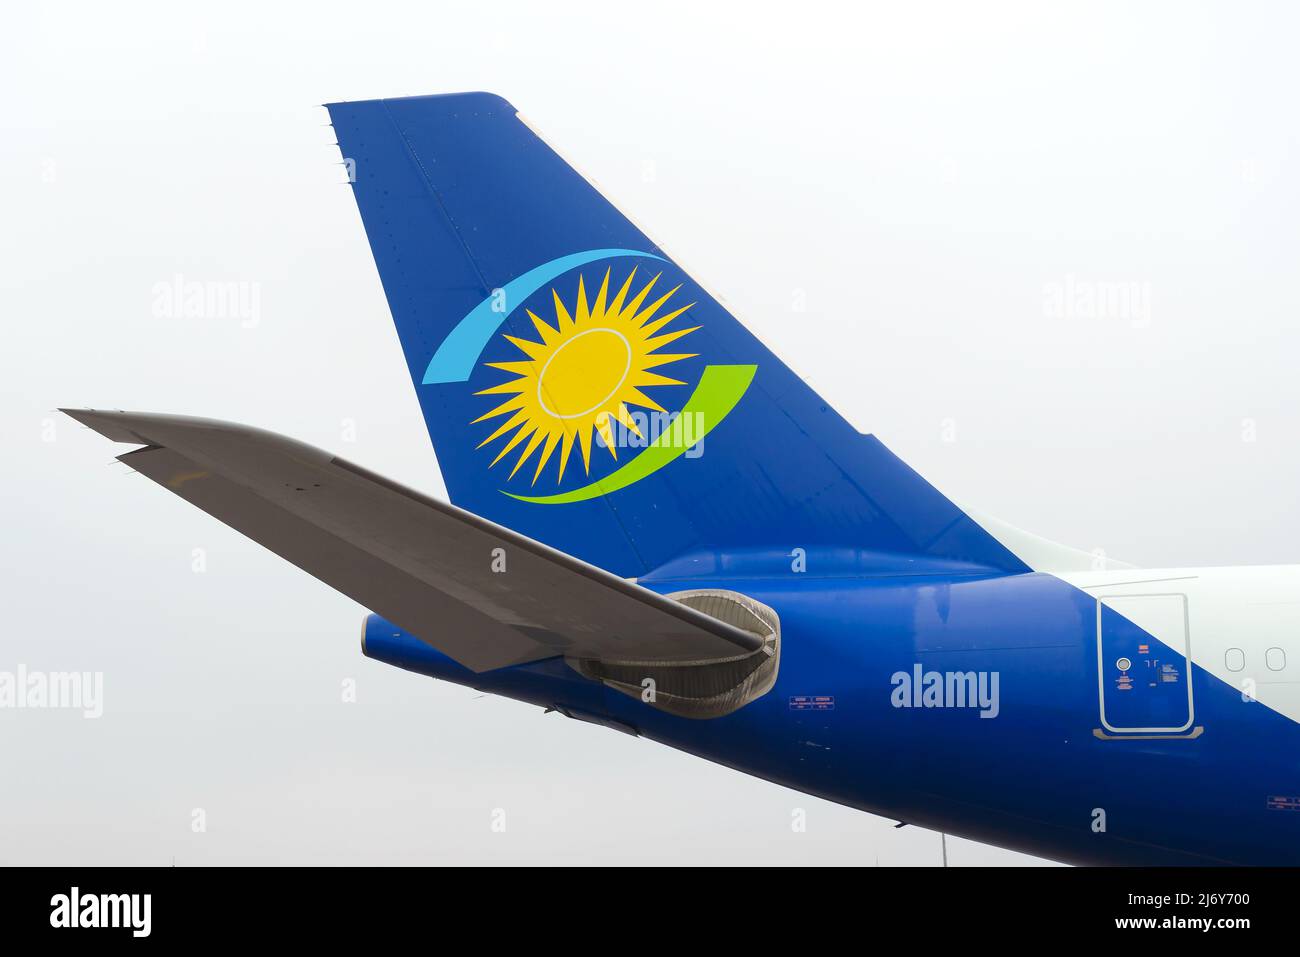 Heck des ruandair Airbus A330-Flugzeugs. Flugzeug A330-200 von Rwandair Airlines Tail. Stockfoto